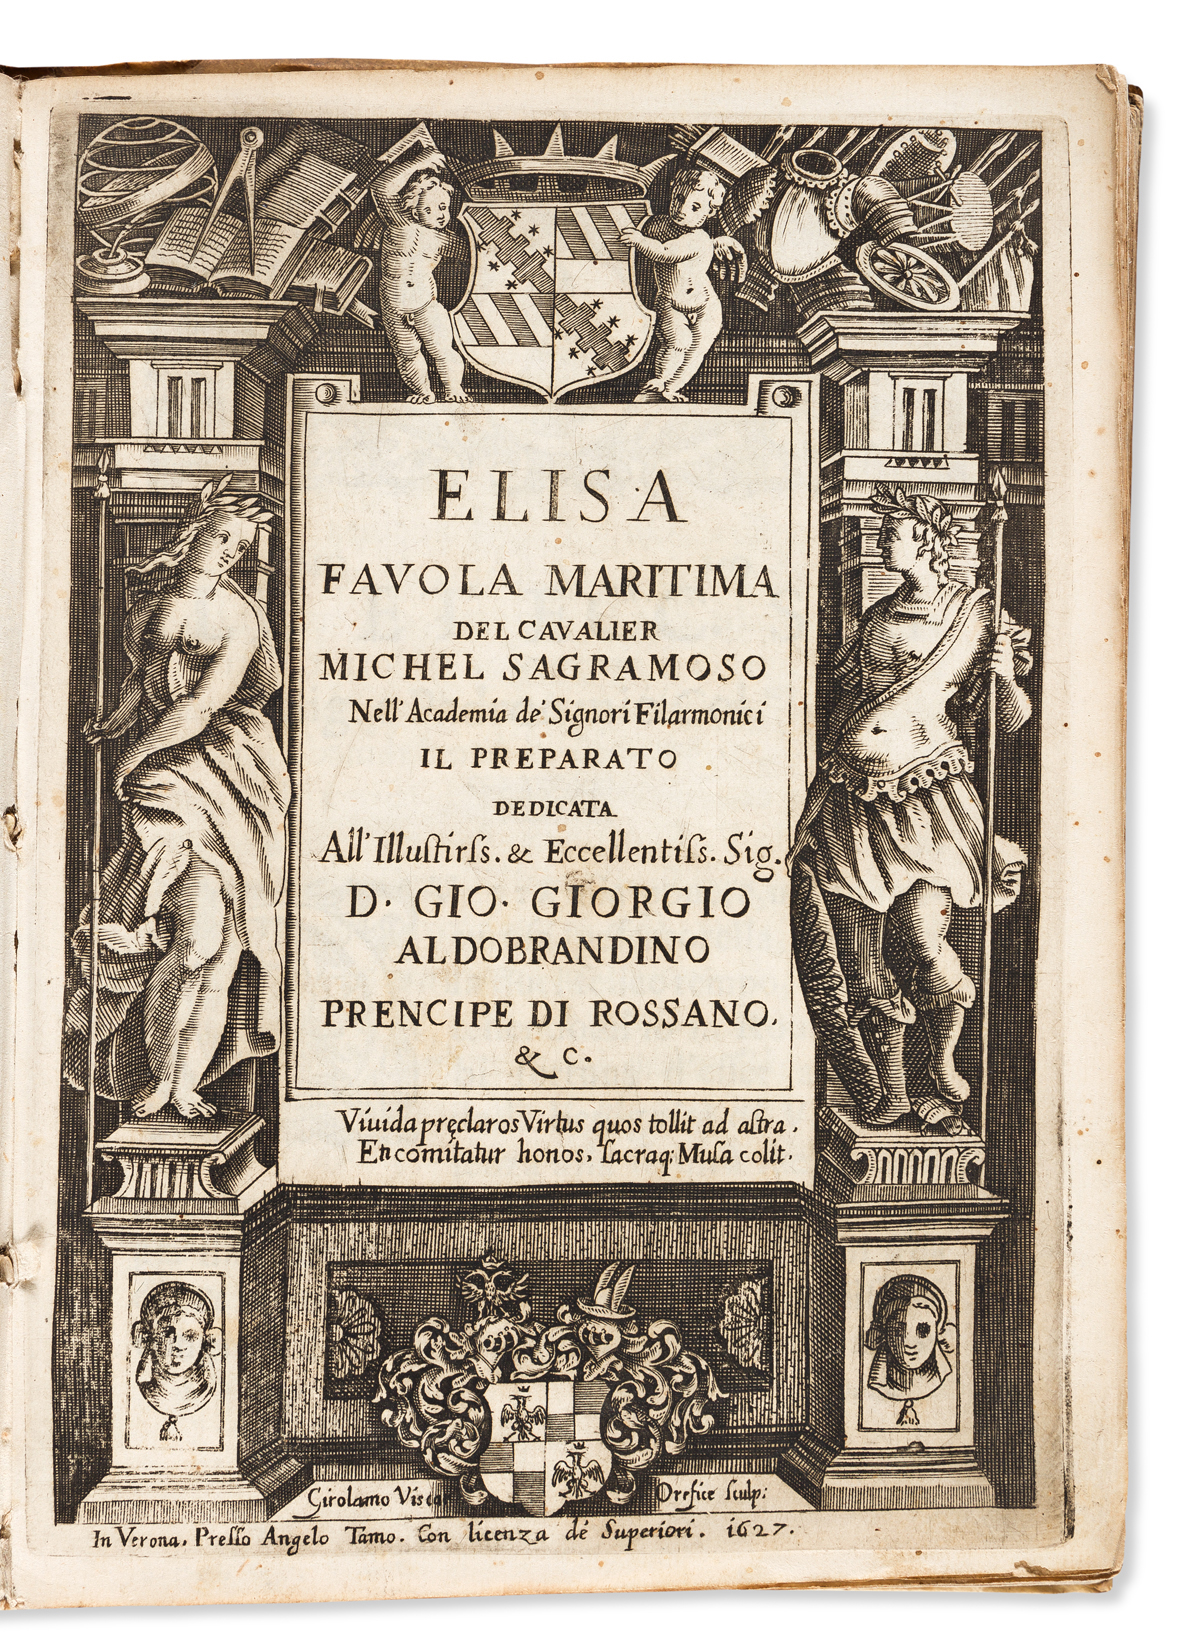 Sagramoso, Michele (fl. circa 1627) Elisa Favola Maritima.